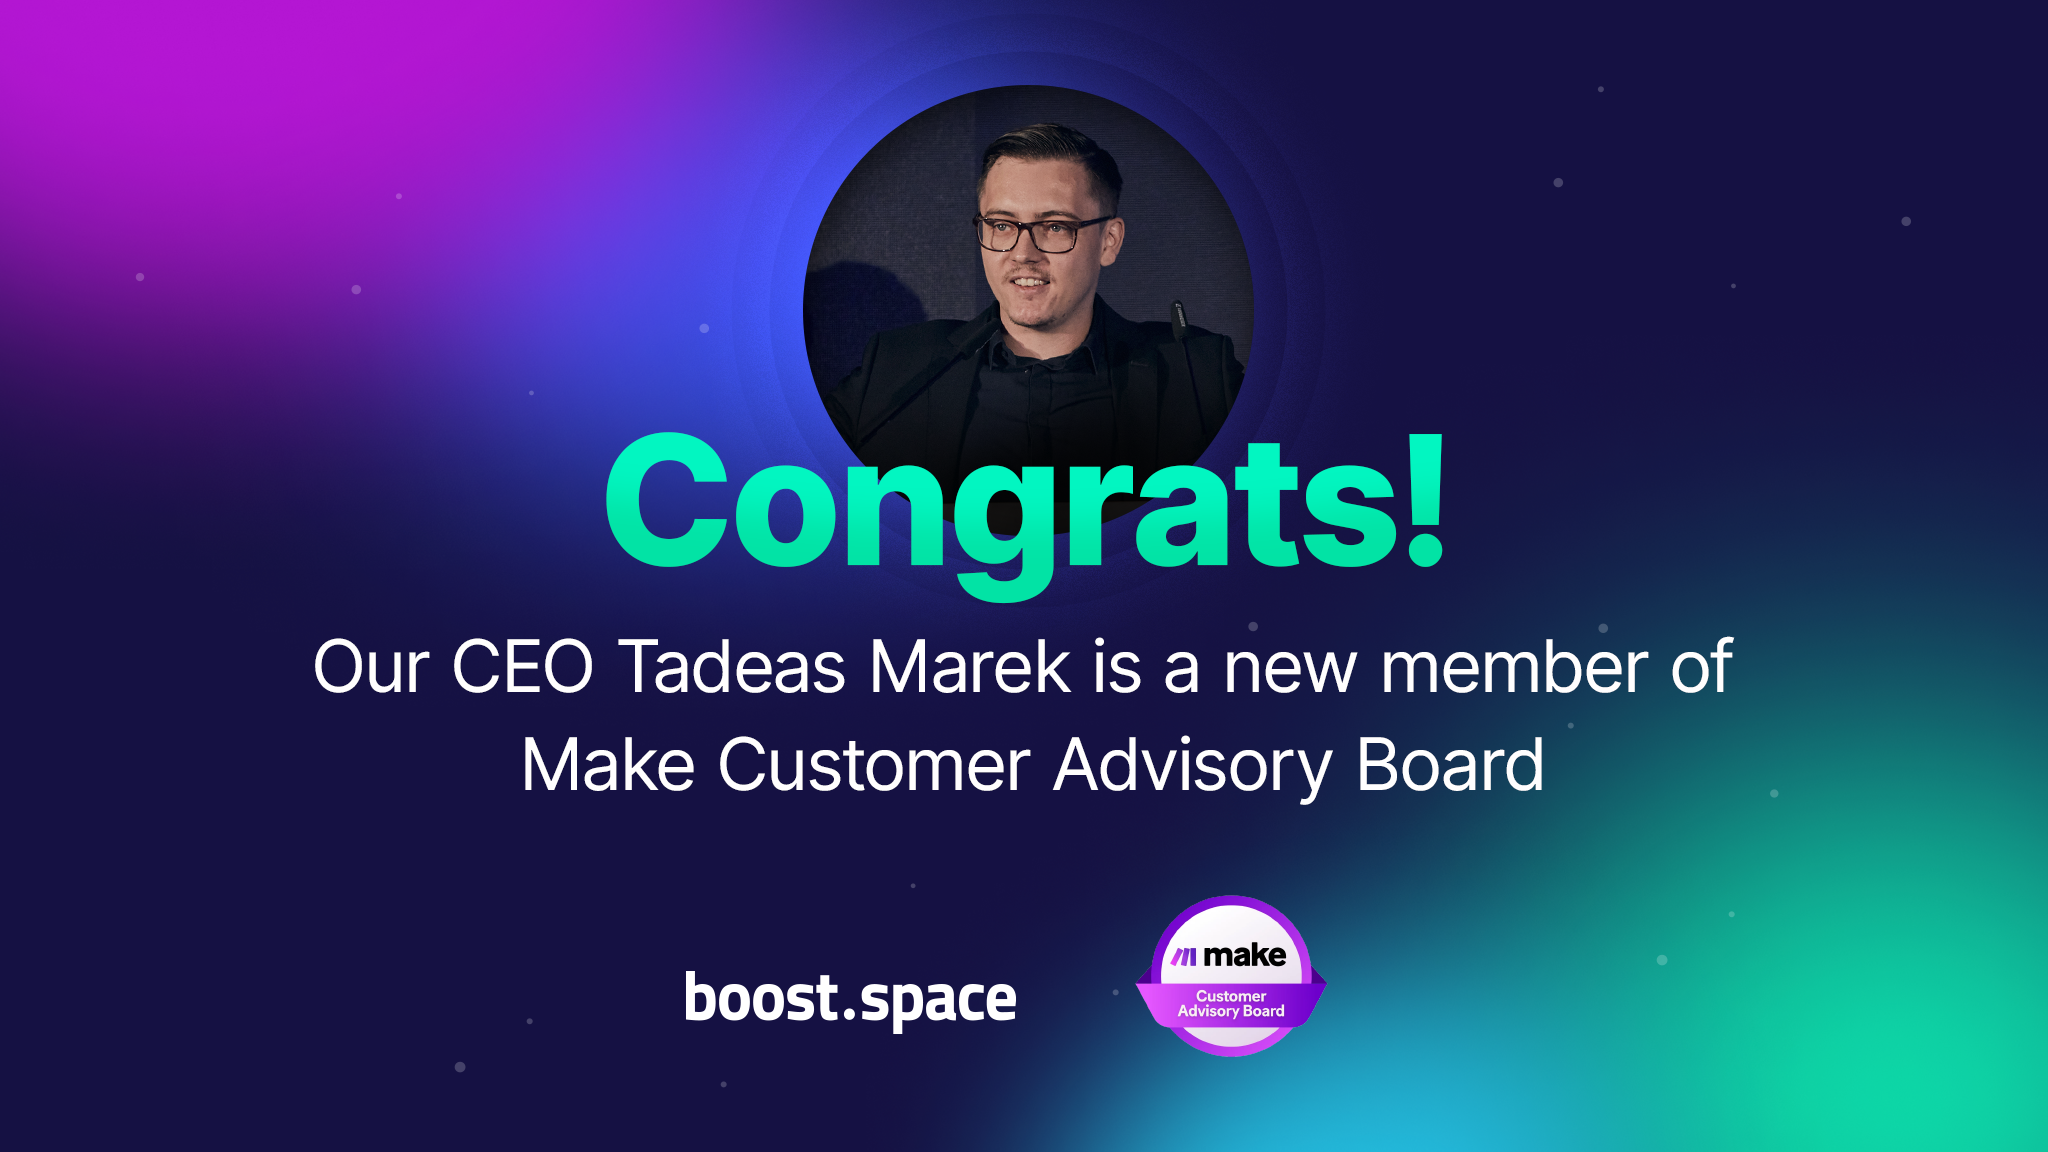 Náš CEO Tadeáš Marek se stal součástí Make Customer Advisory Board!